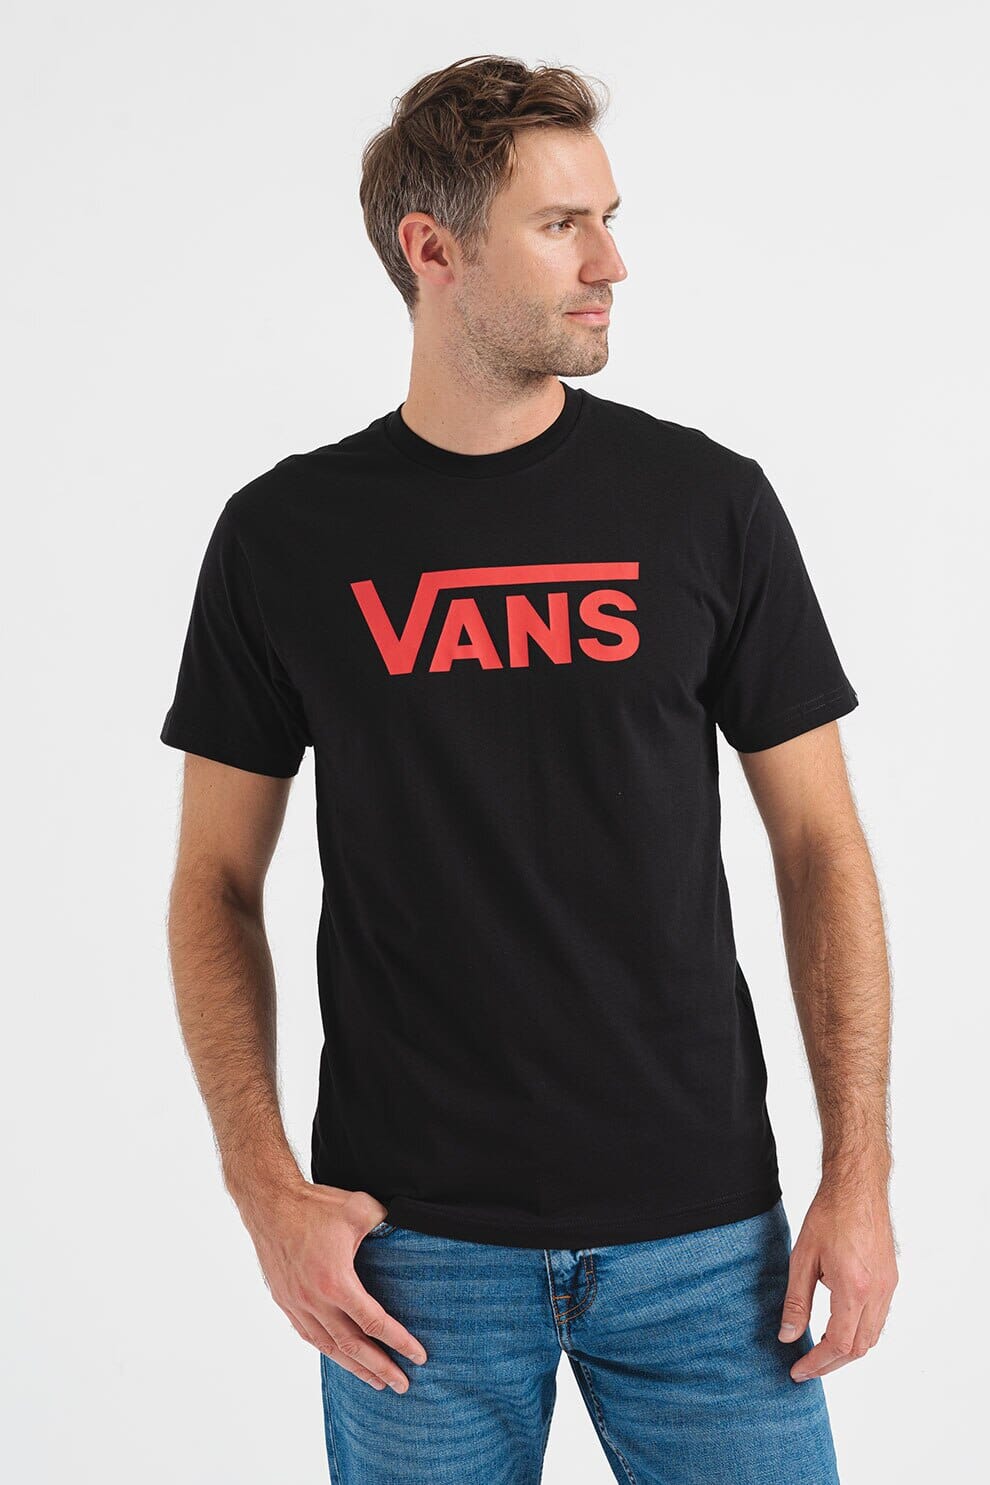 VANS Classic T-Shirt Black/Reinvented Red Men's Short Sleeve T-Shirts Vans 